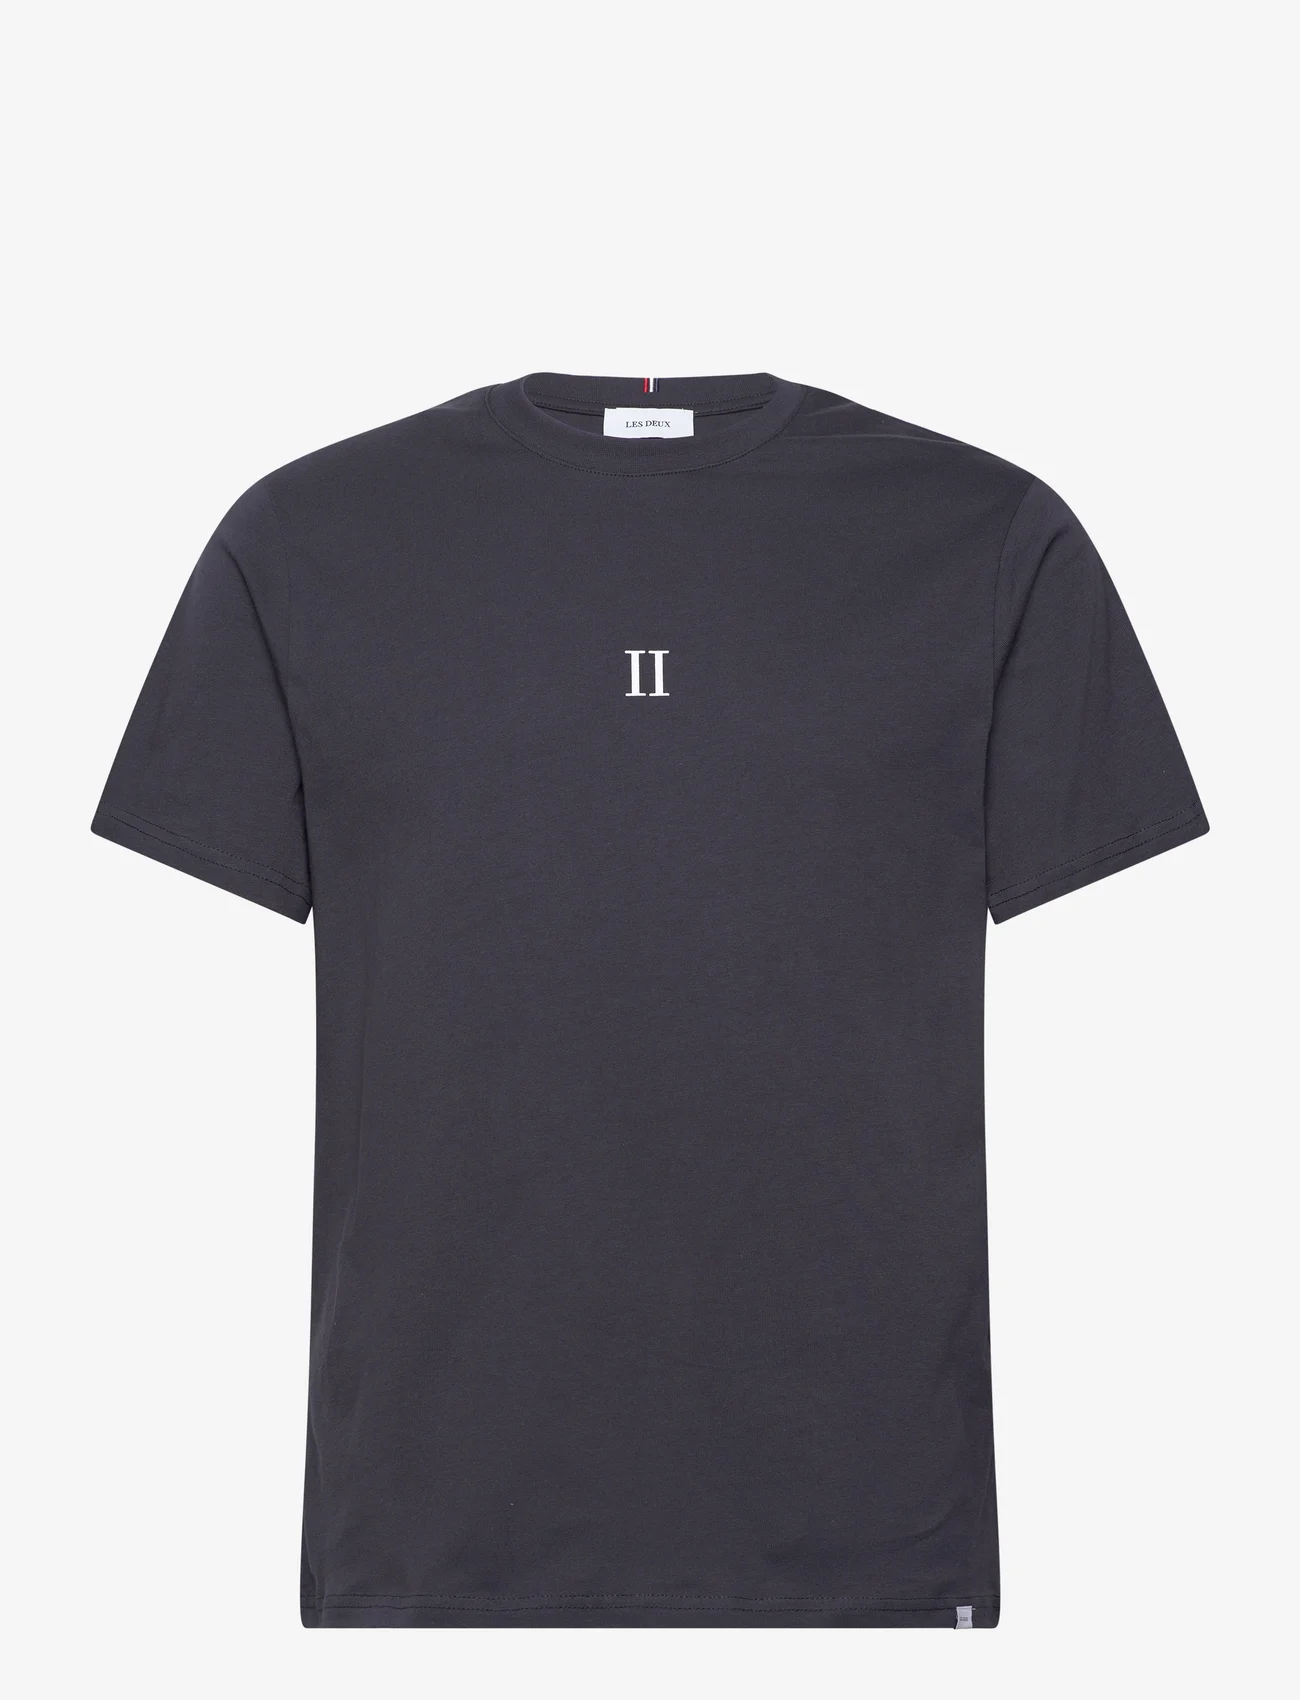 Les Deux - Mini Encore T-Shirt - nordisk stil - dark navy/white - 0